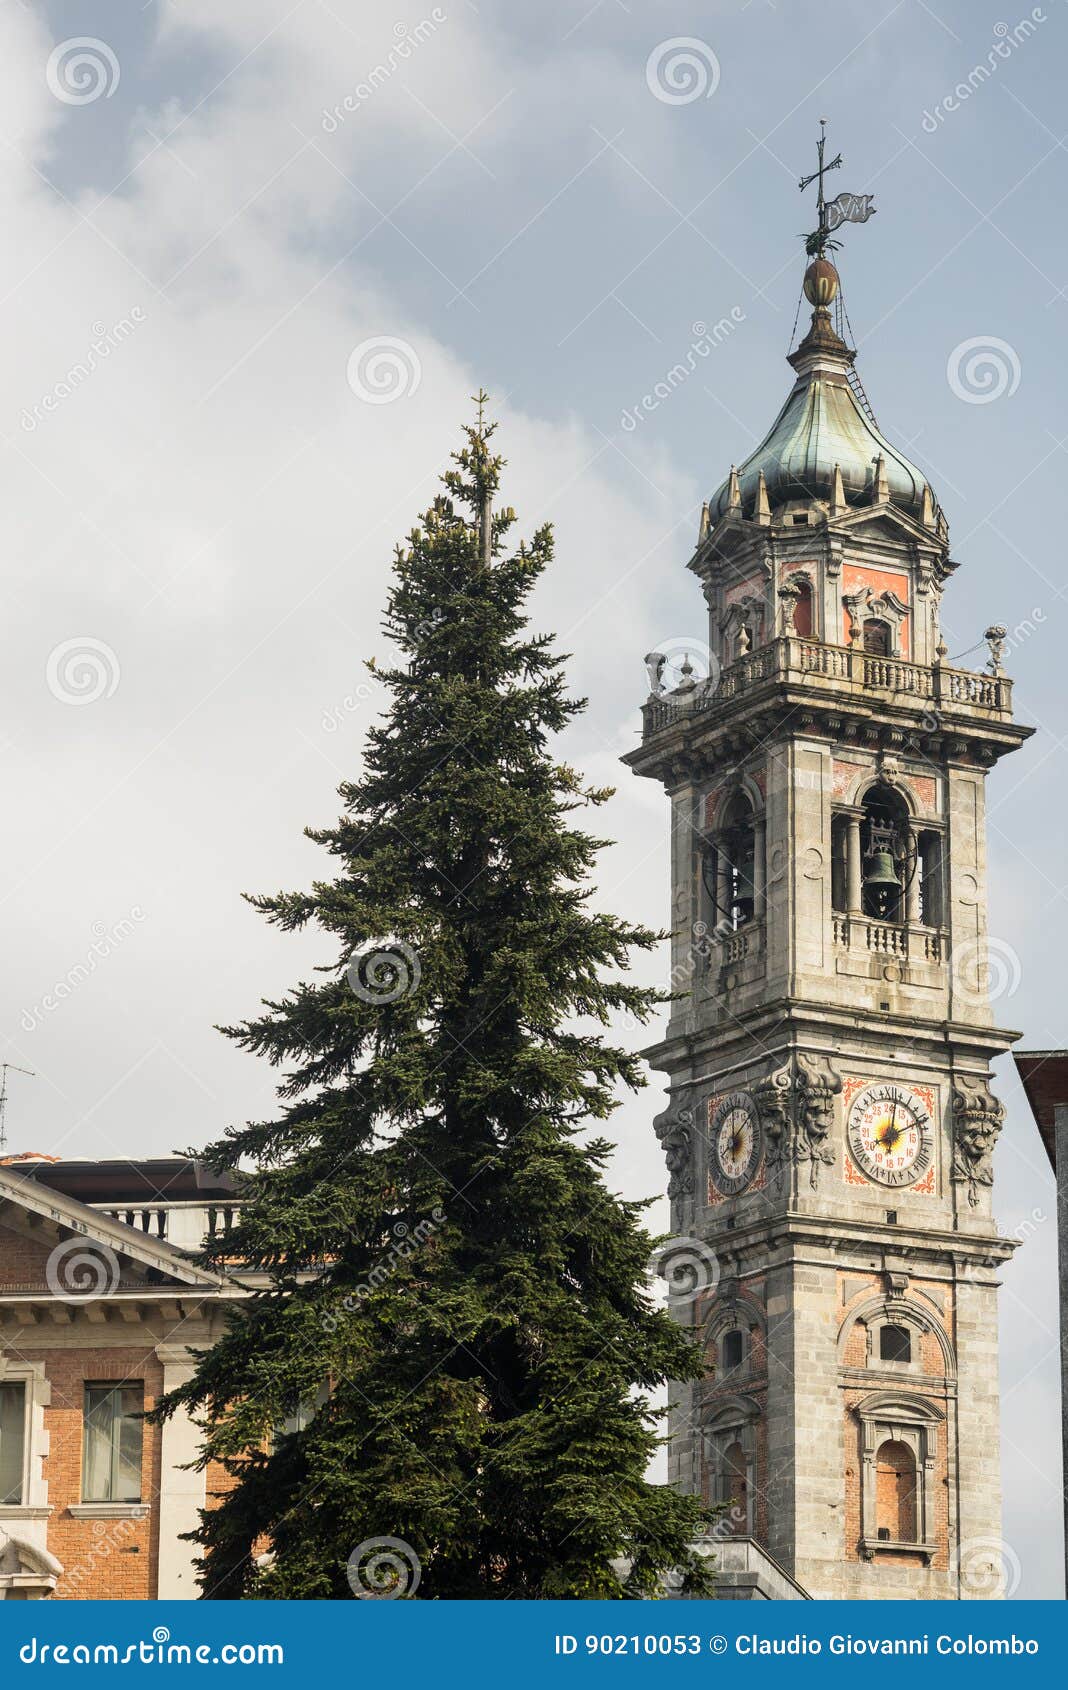 varese italy: belfry of san vittore